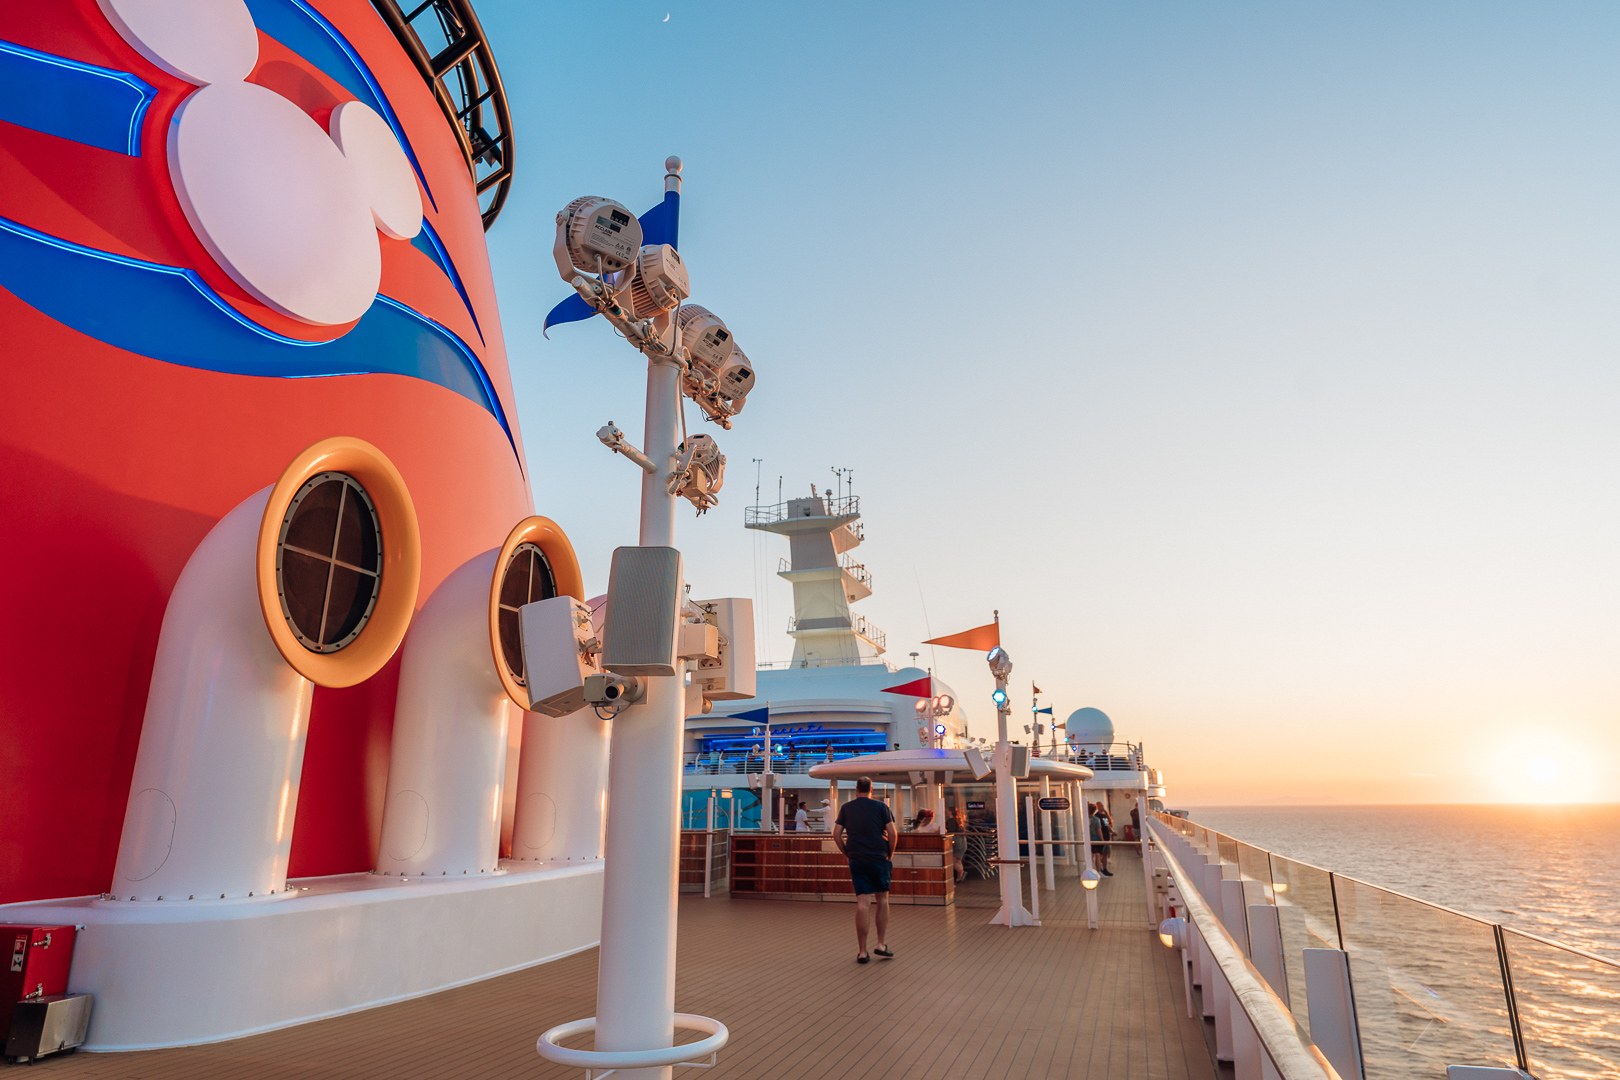 Disney Dream Cruise Ship